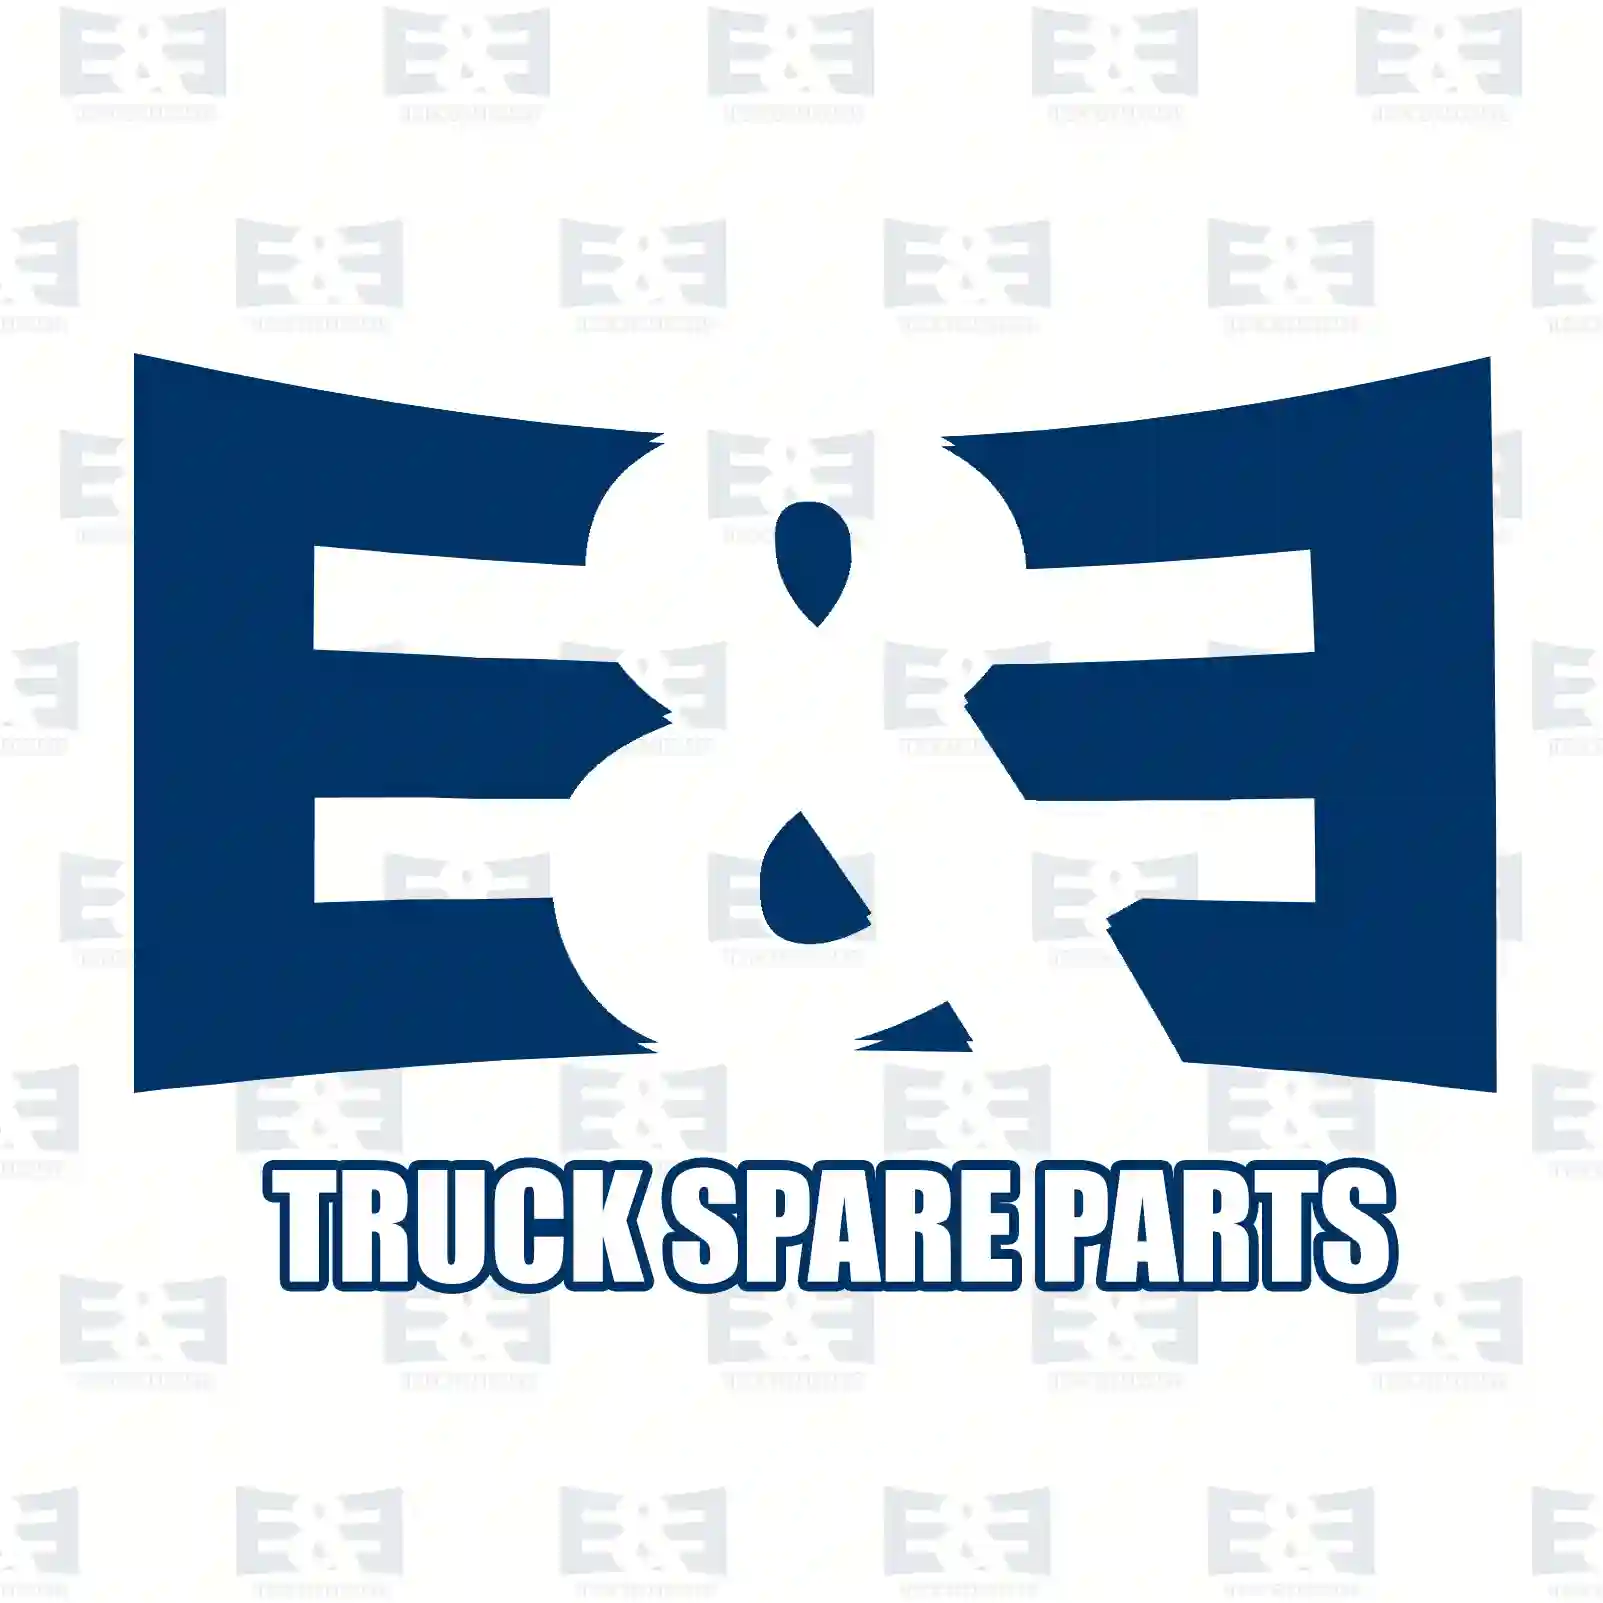 Repair kit, solenoid valve, 2E2283490, 1337733, 93161917, 81259026179, 0004207355, ZG50860-0008 ||  2E2283490 E&E Truck Spare Parts | Truck Spare Parts, Auotomotive Spare Parts Repair kit, solenoid valve, 2E2283490, 1337733, 93161917, 81259026179, 0004207355, ZG50860-0008 ||  2E2283490 E&E Truck Spare Parts | Truck Spare Parts, Auotomotive Spare Parts